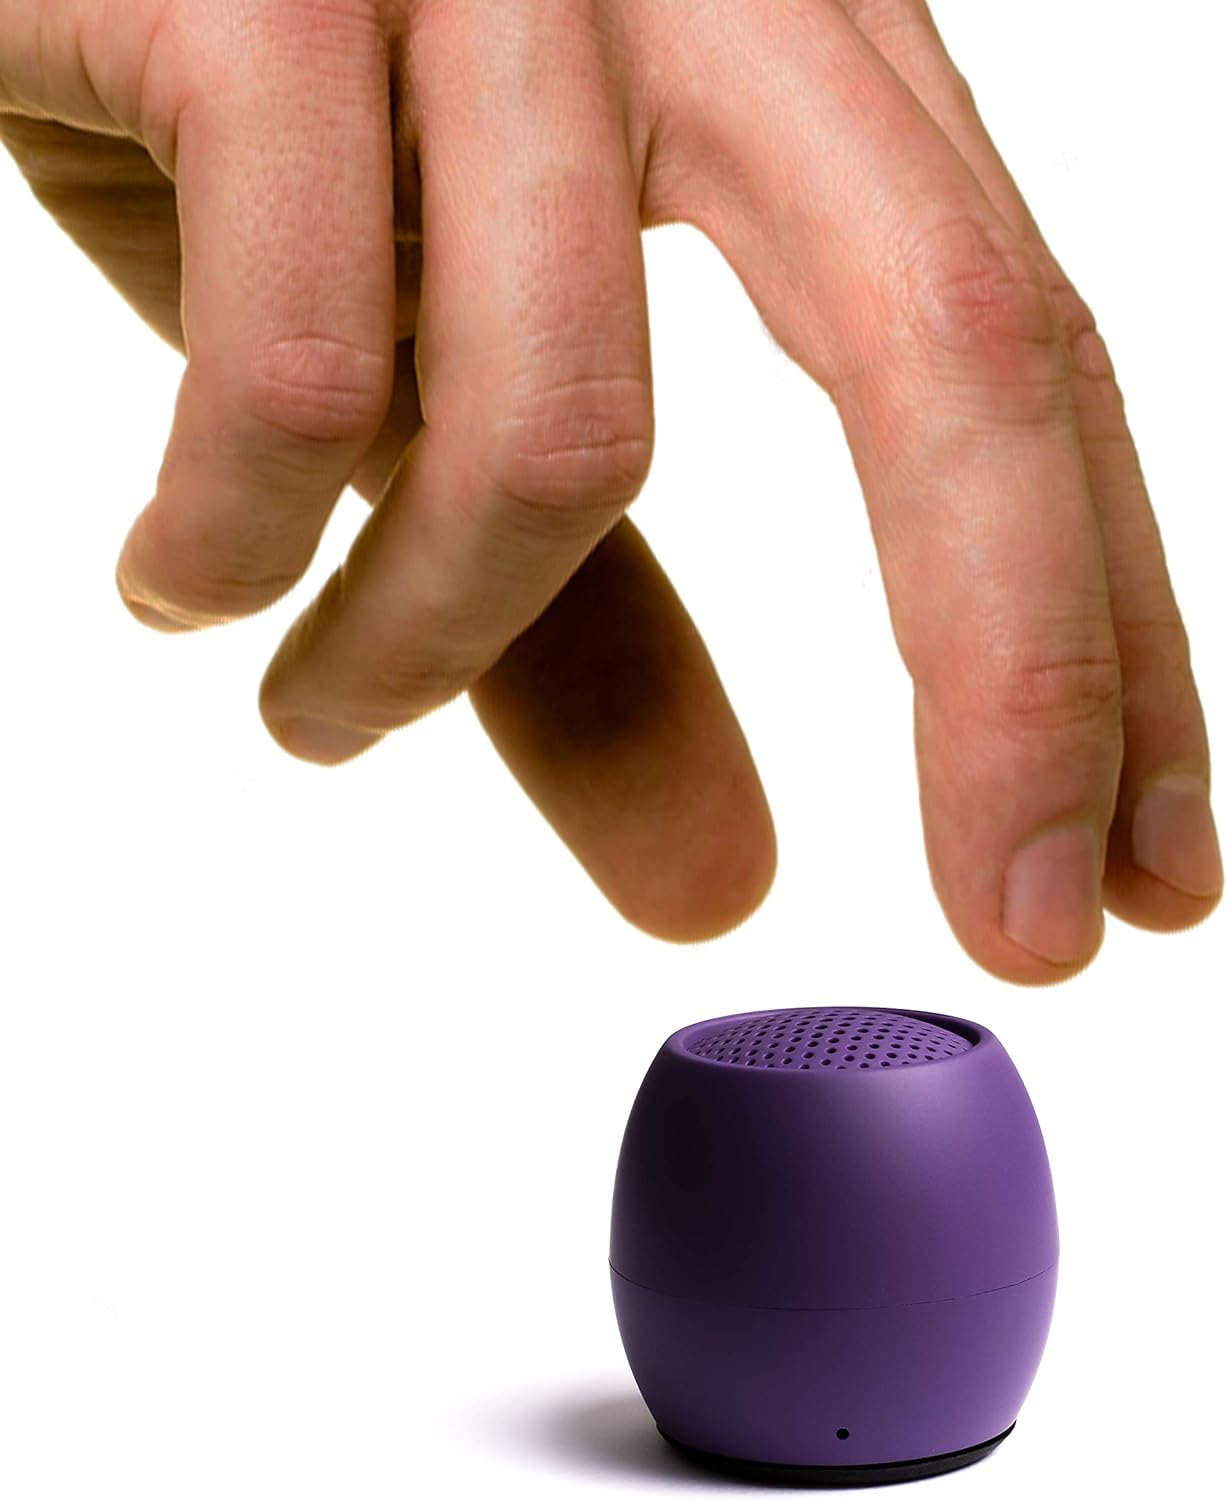 Boompods Zero Bluetooth Speaker - Purple